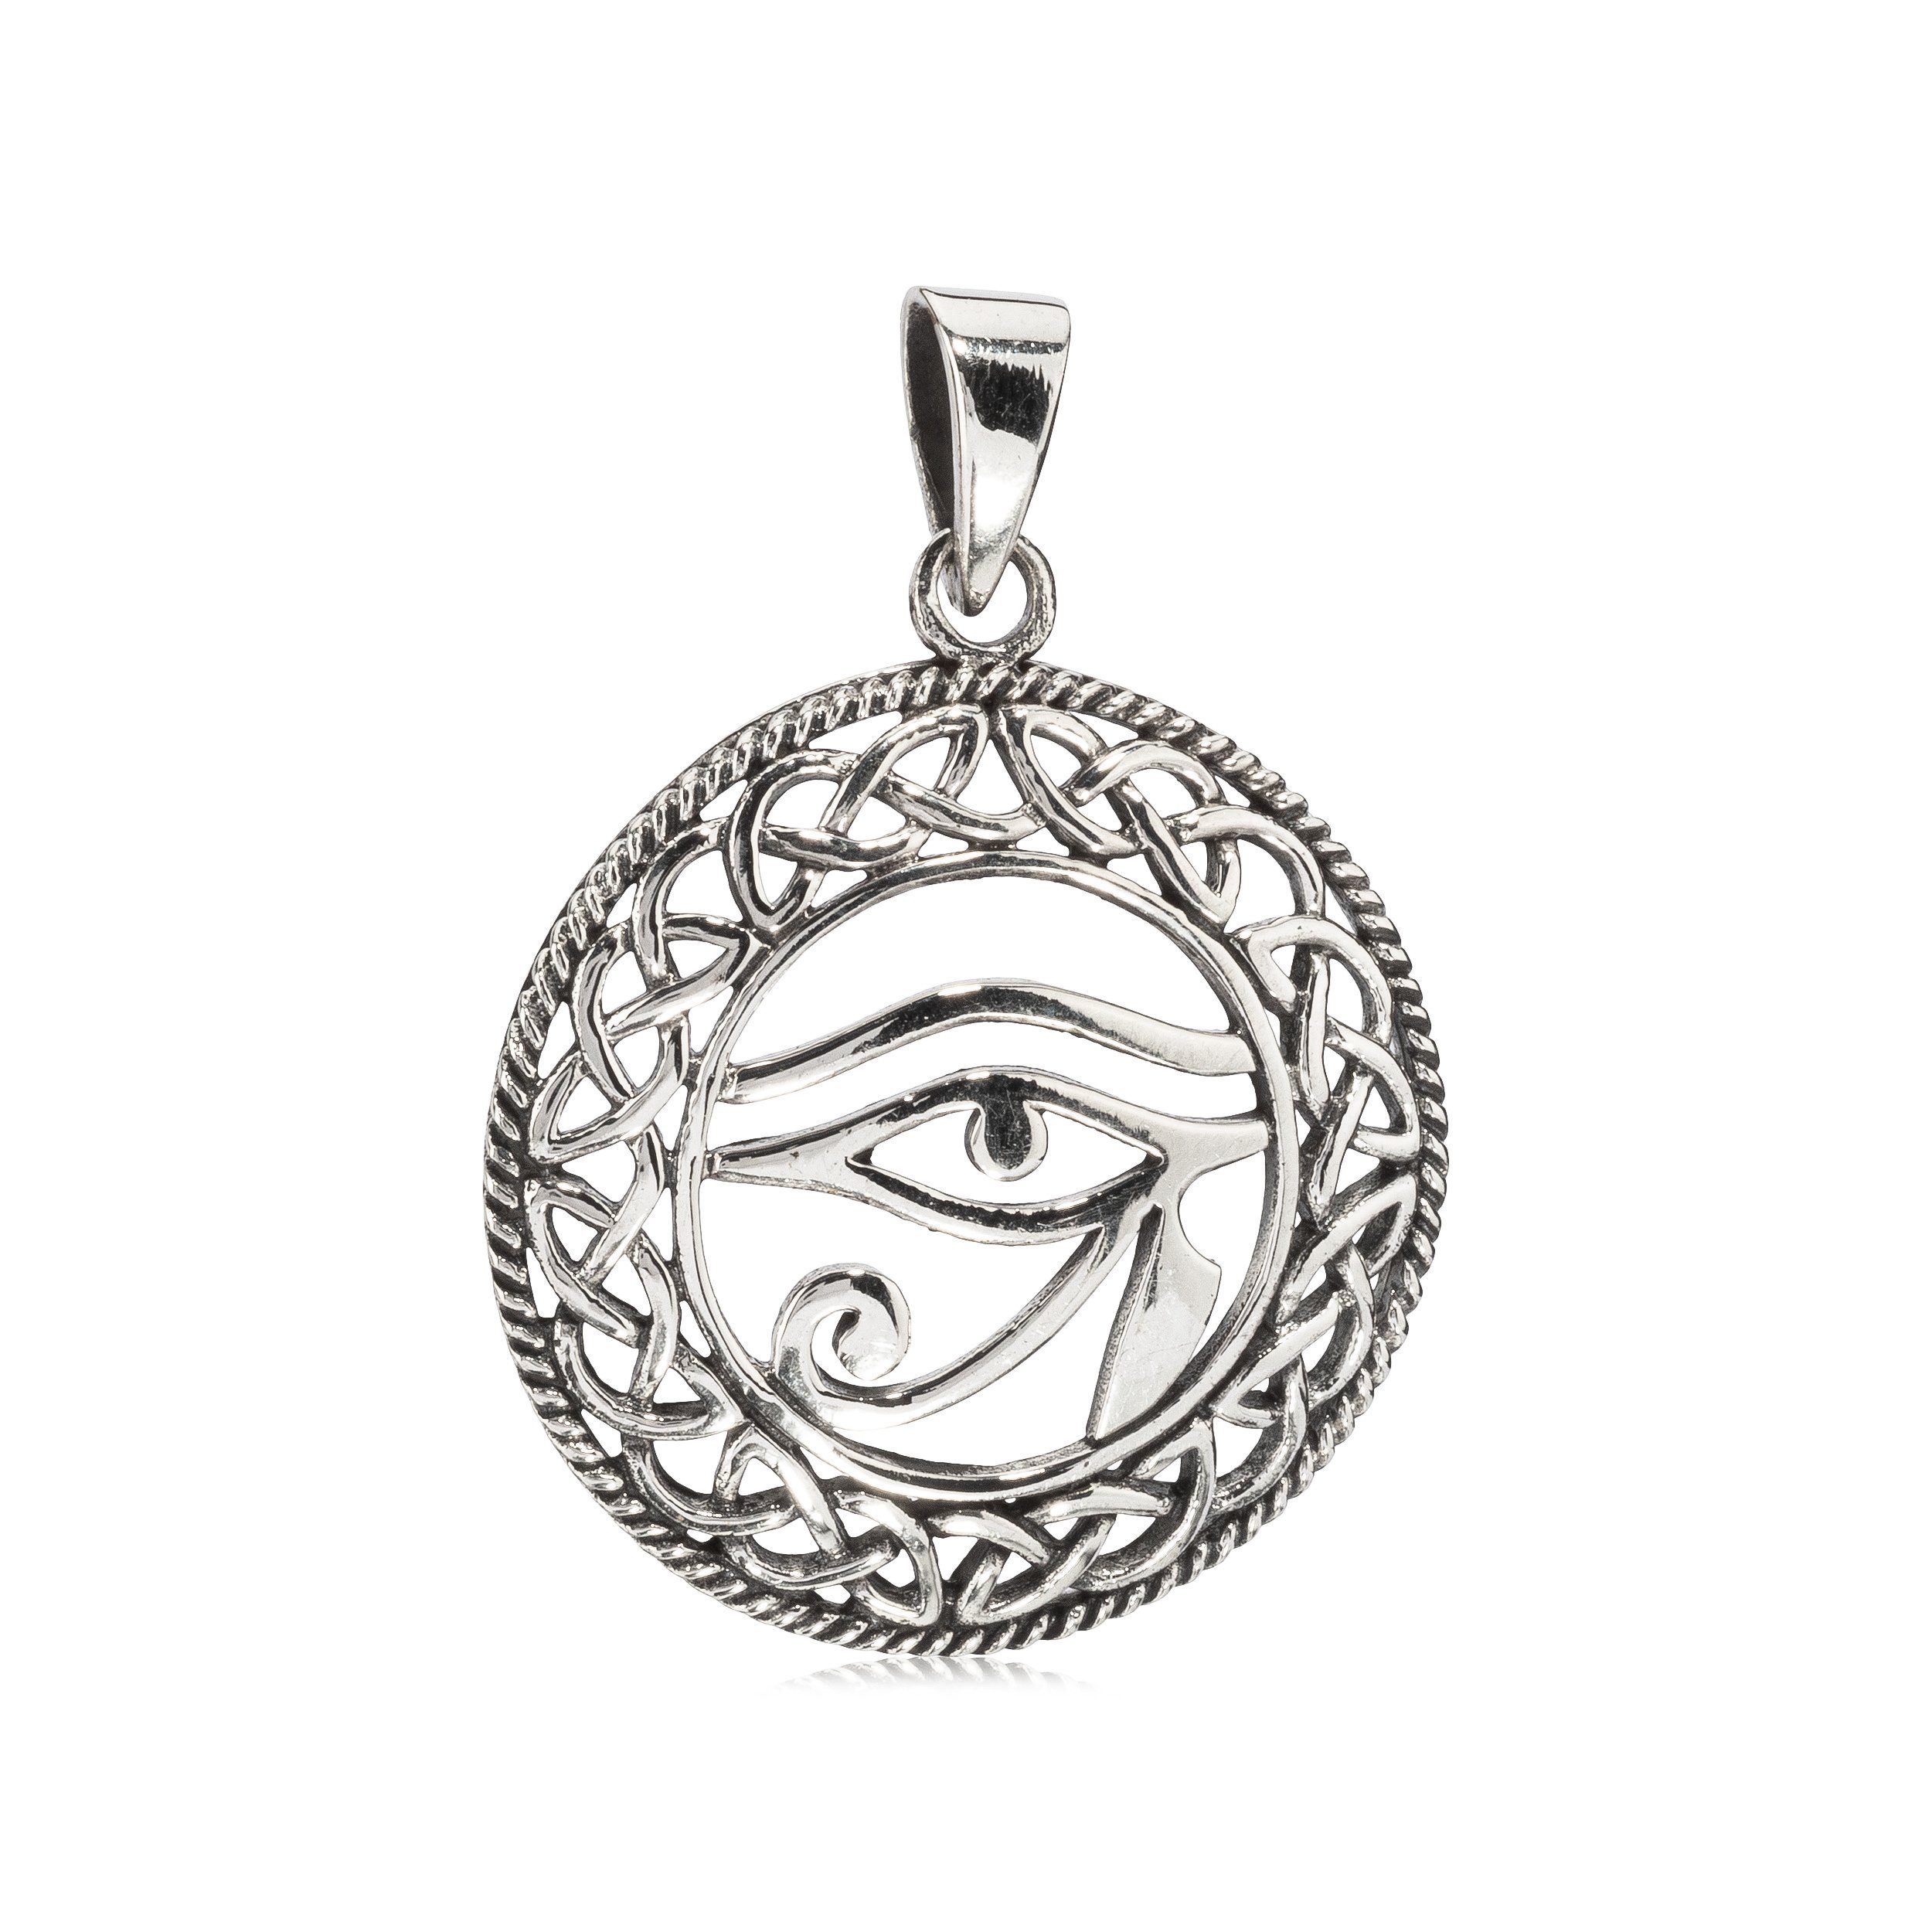 NKlaus Kettenanhänger Kettenanhänger Auge des Horus 925 Silber 3cm ägyp, 925 Sterling Silber Silberschmuck für Damen